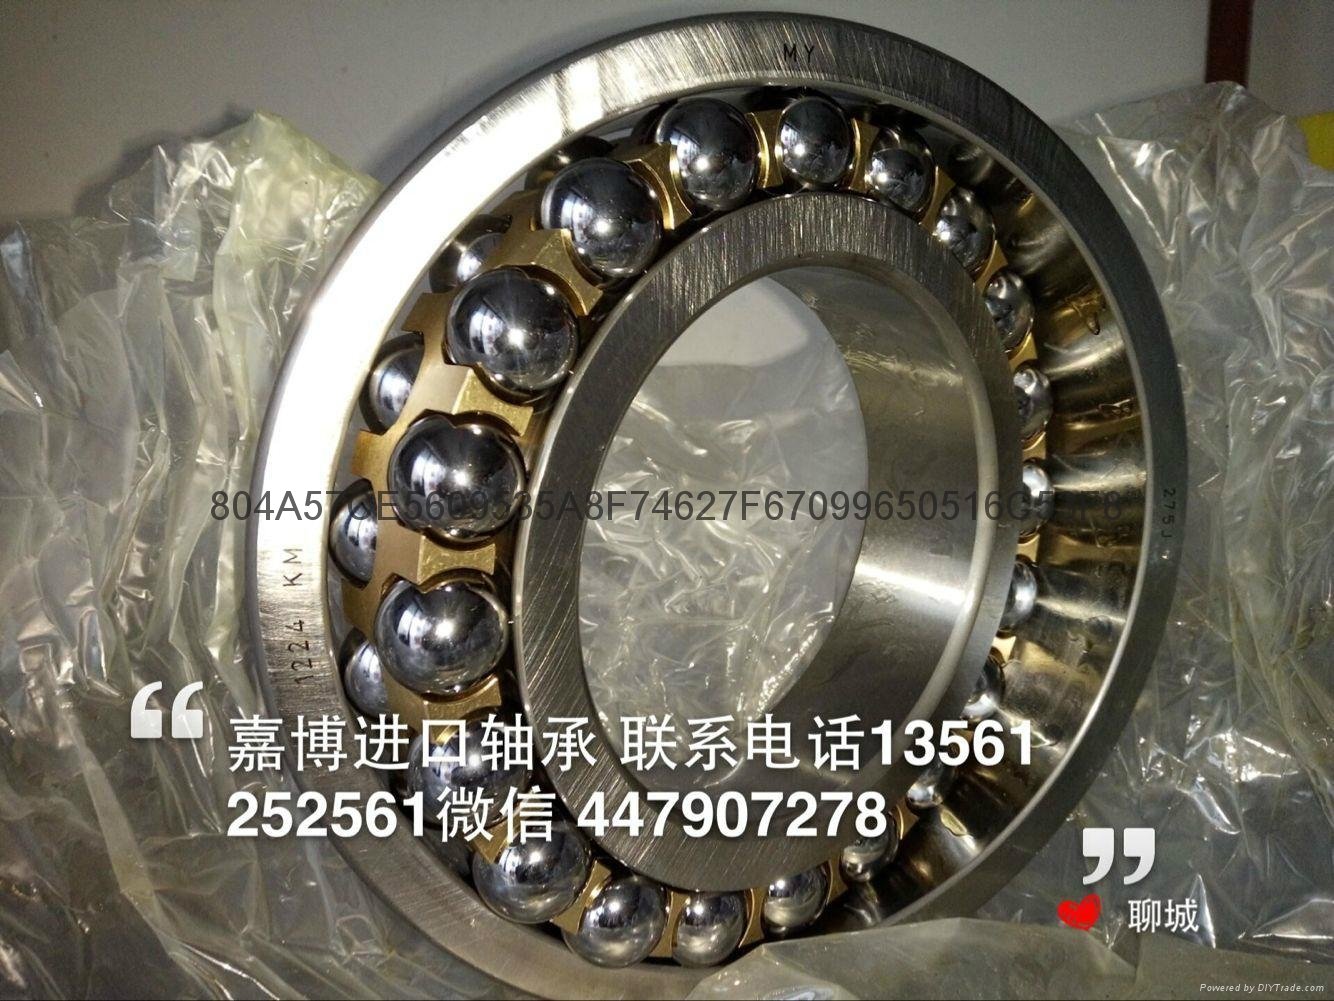 SKF1224KM aligning ball bearing